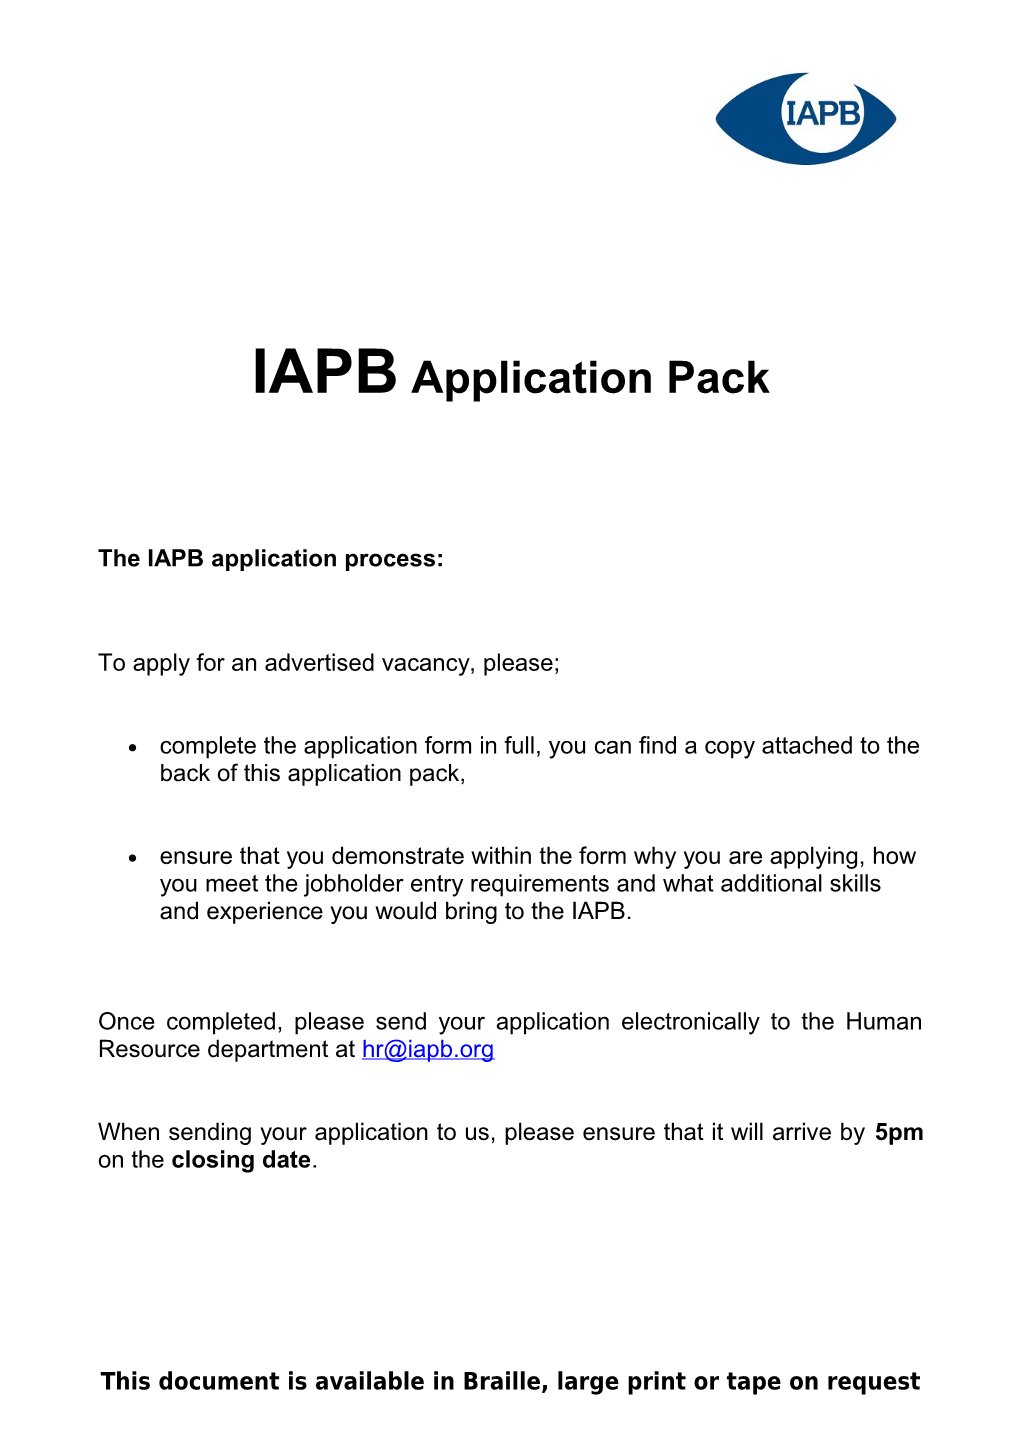 The IAPB Application Process